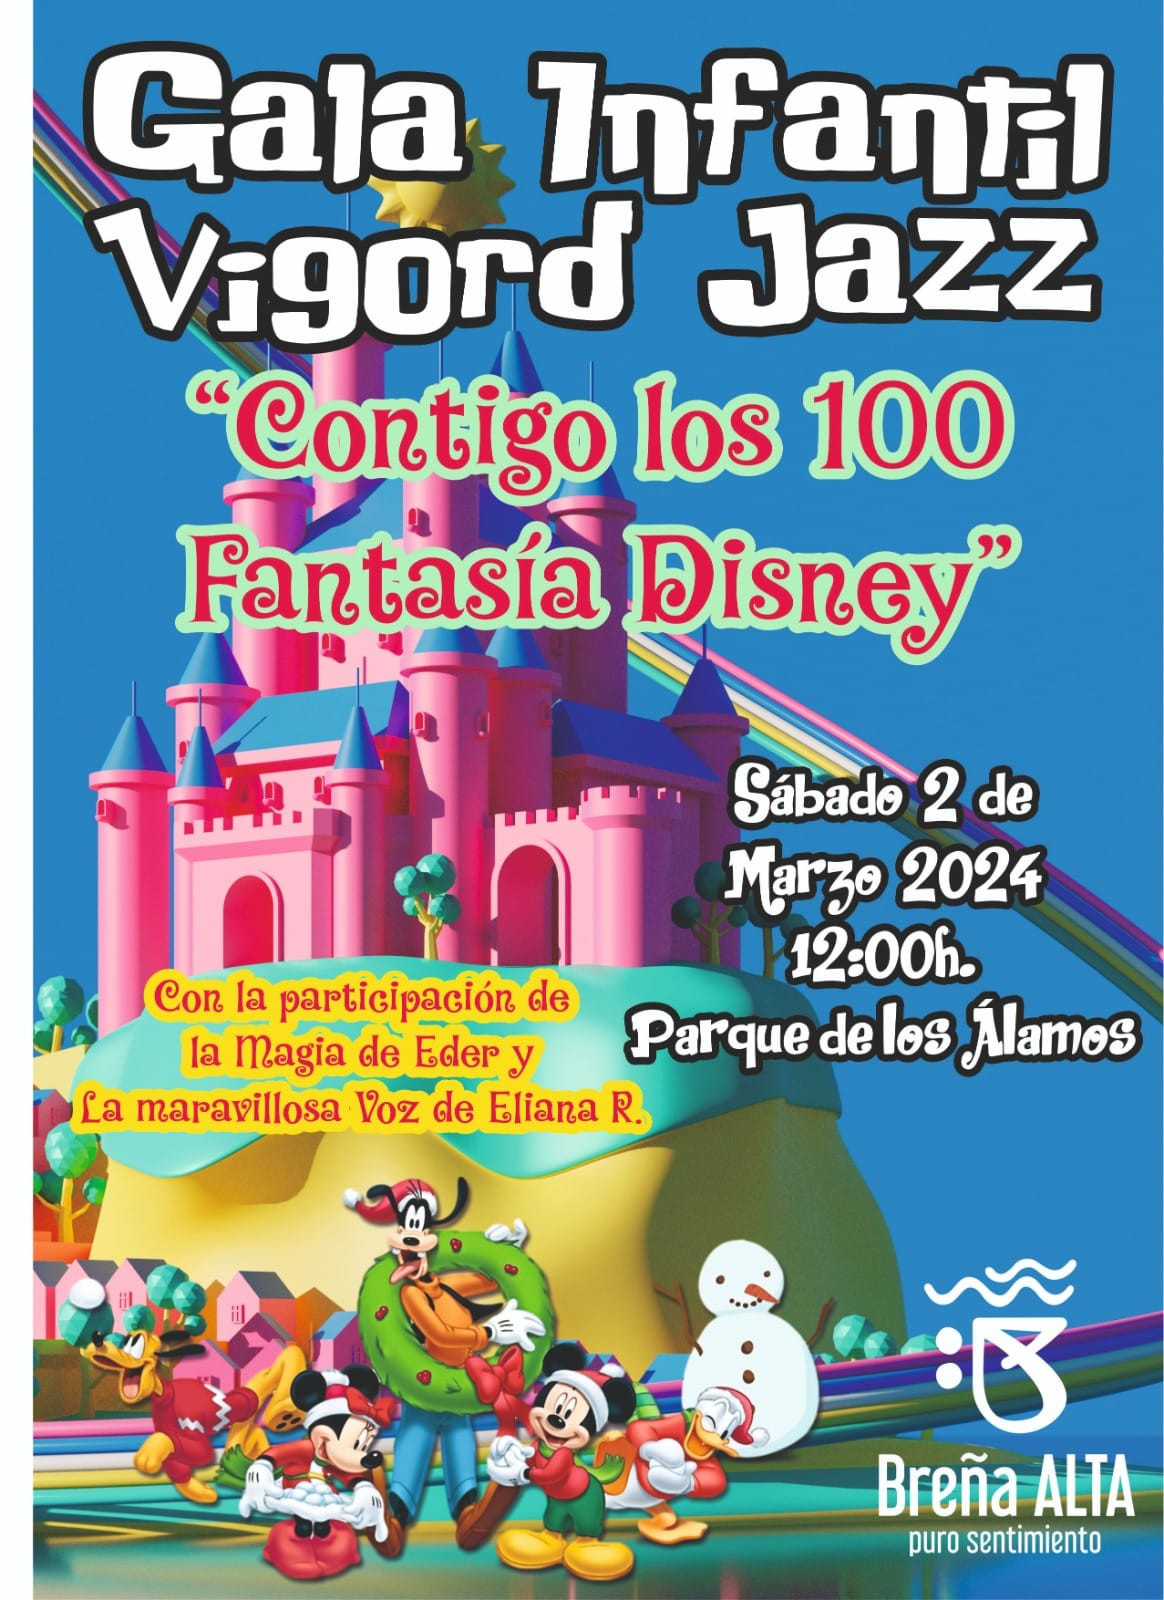 Cartel Gala Infantil Vigord Jazz